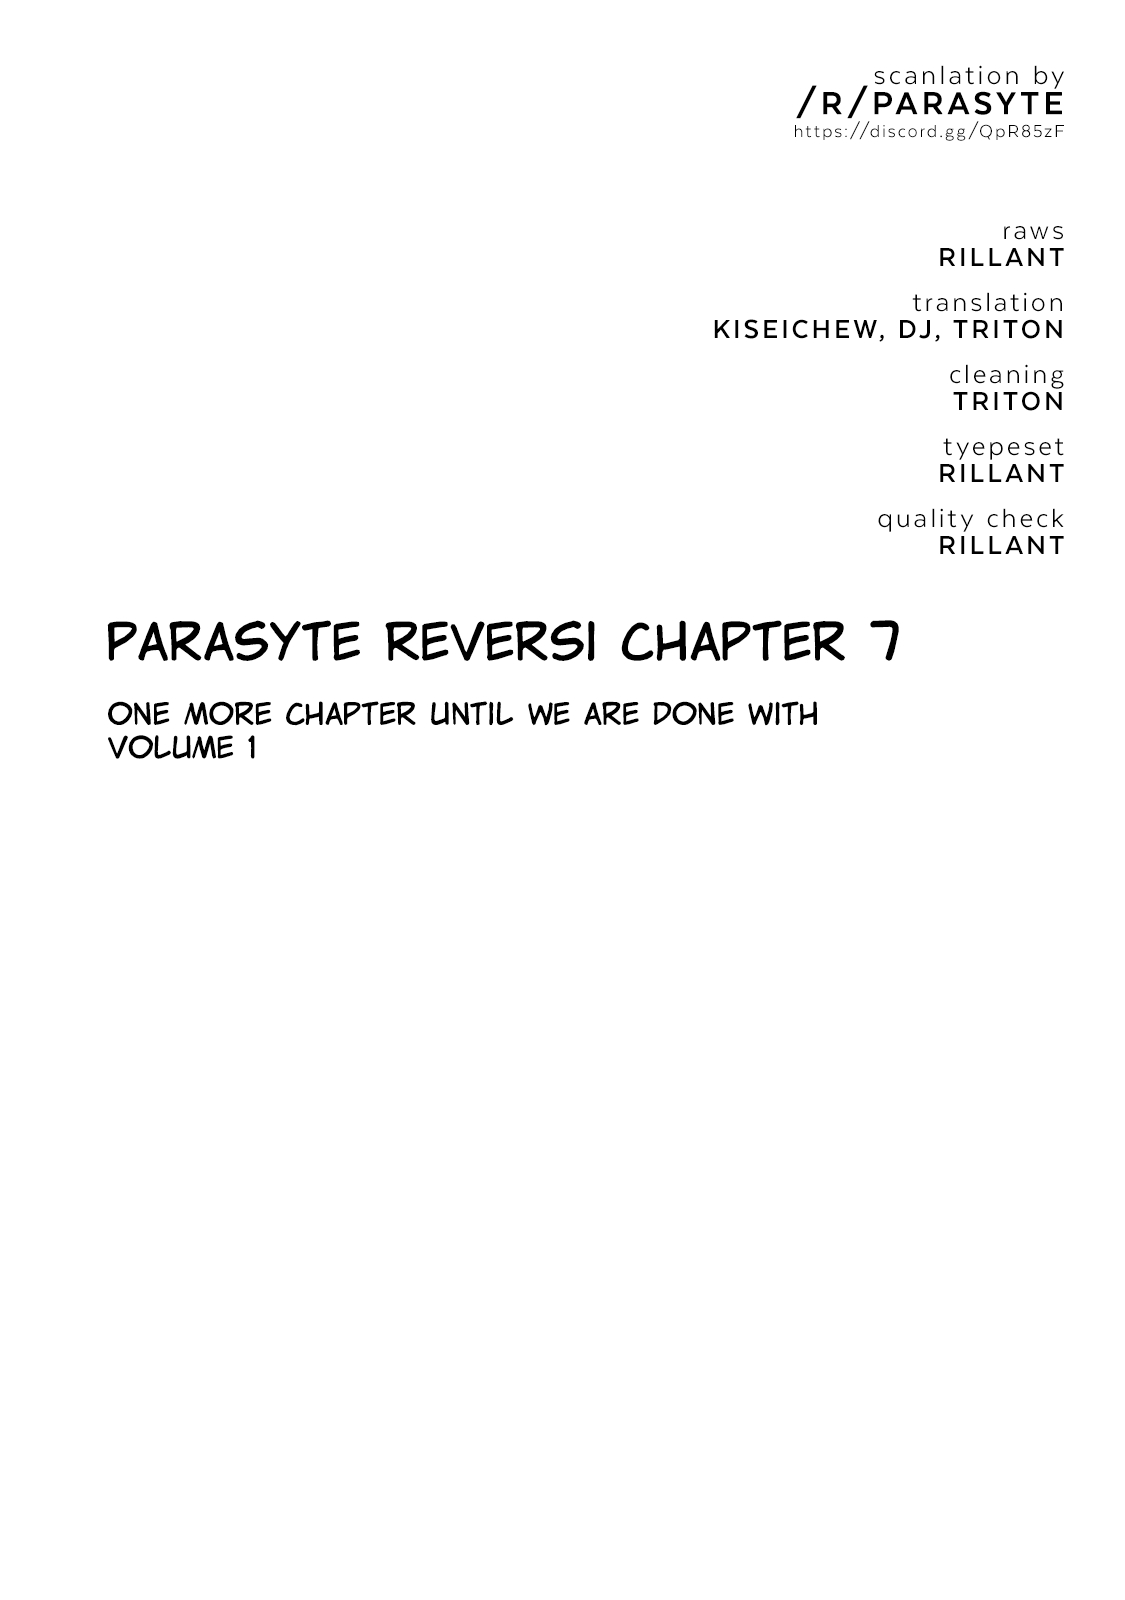 Parasyte Reversi Vol. 1 Ch. 7 Start up